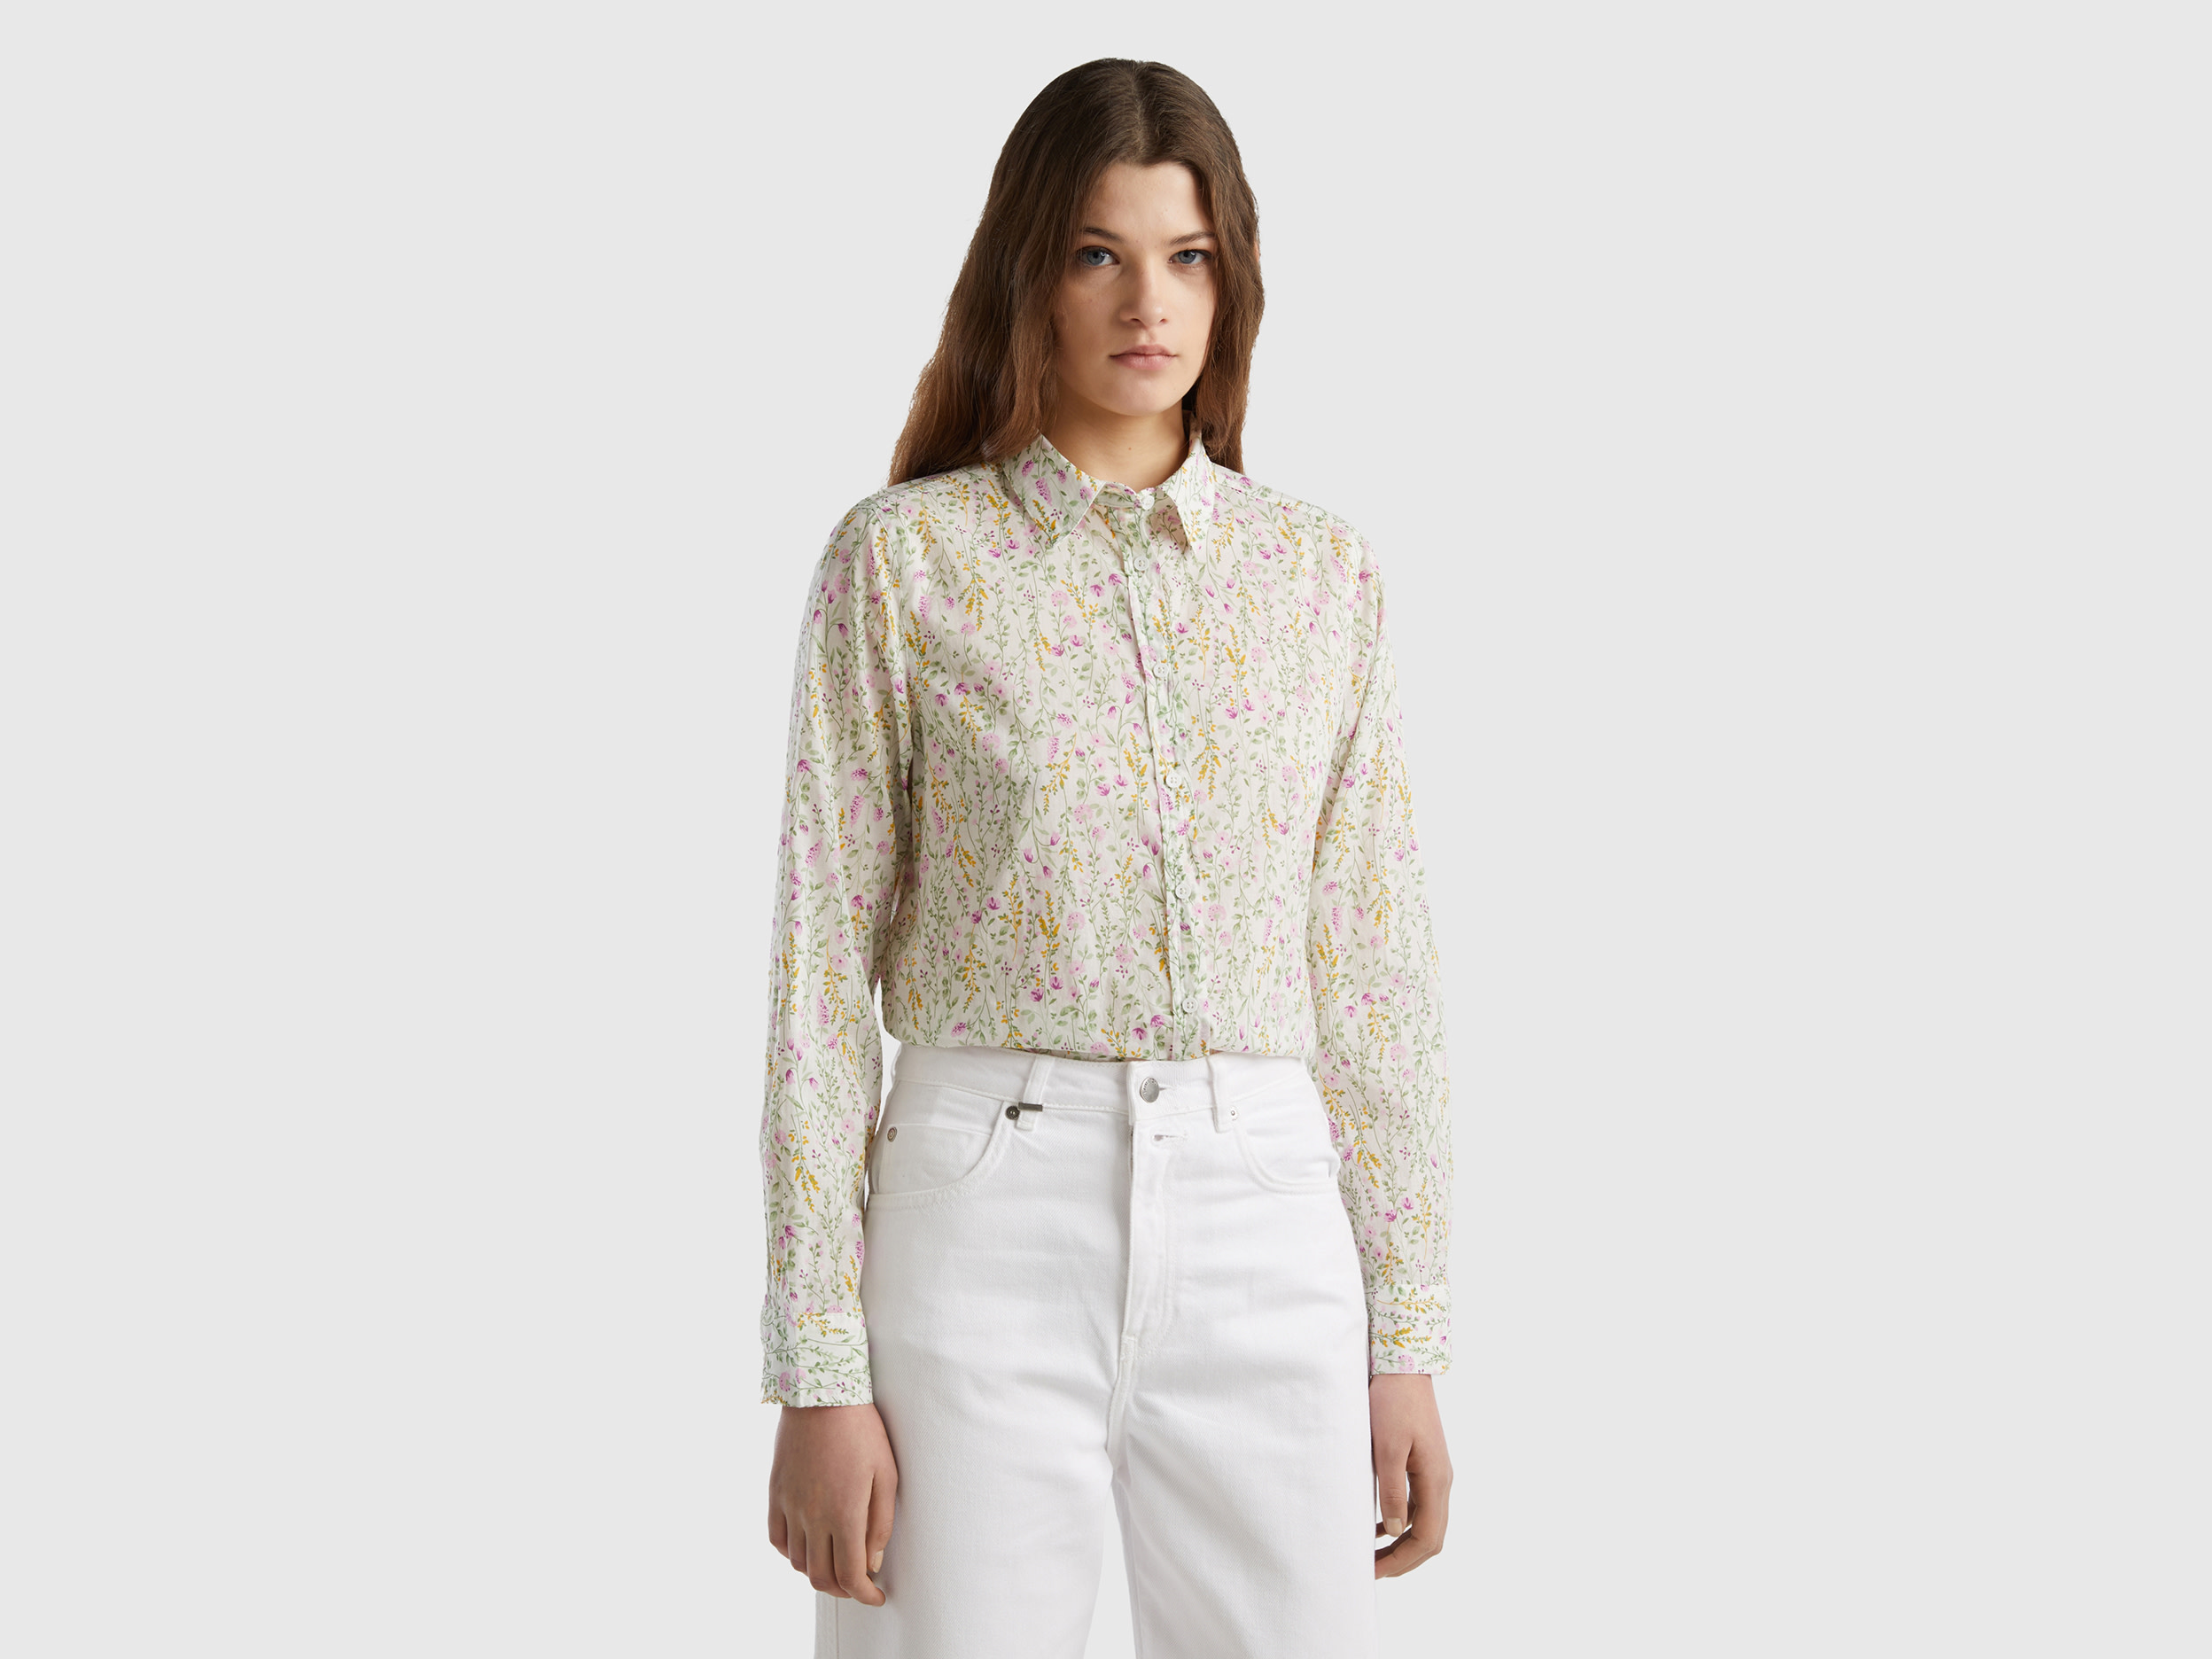 Benetton, 100% Cotton Patterned Shirt, size M, White, Women